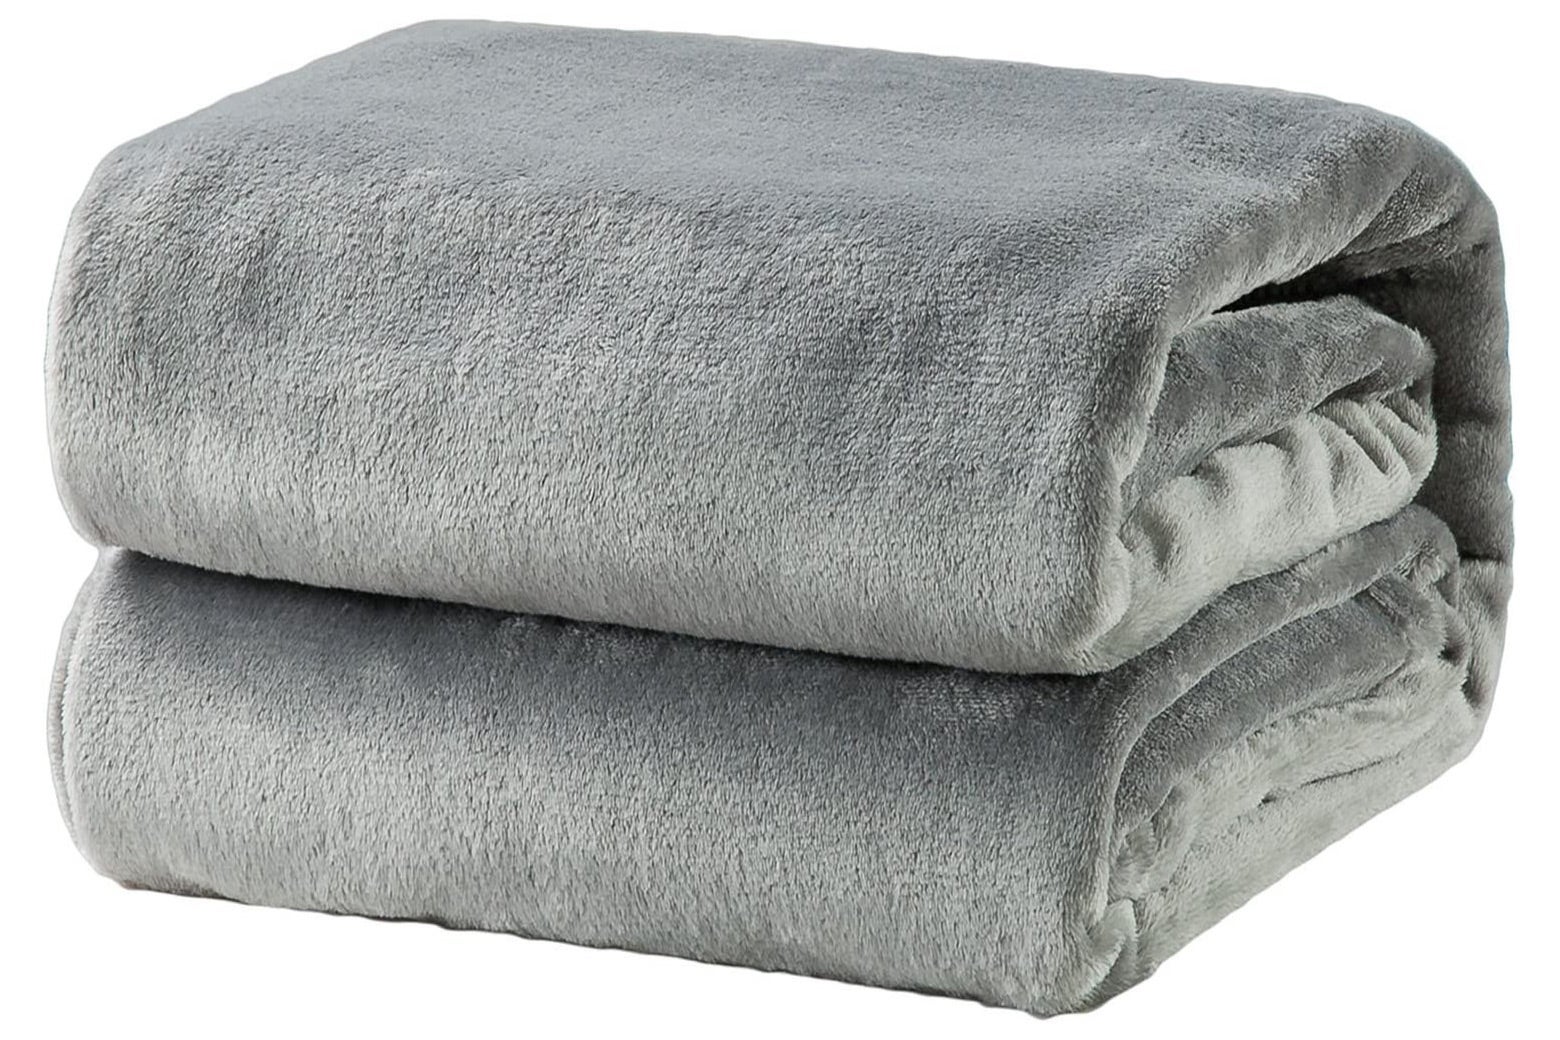 Folded fleece blanket